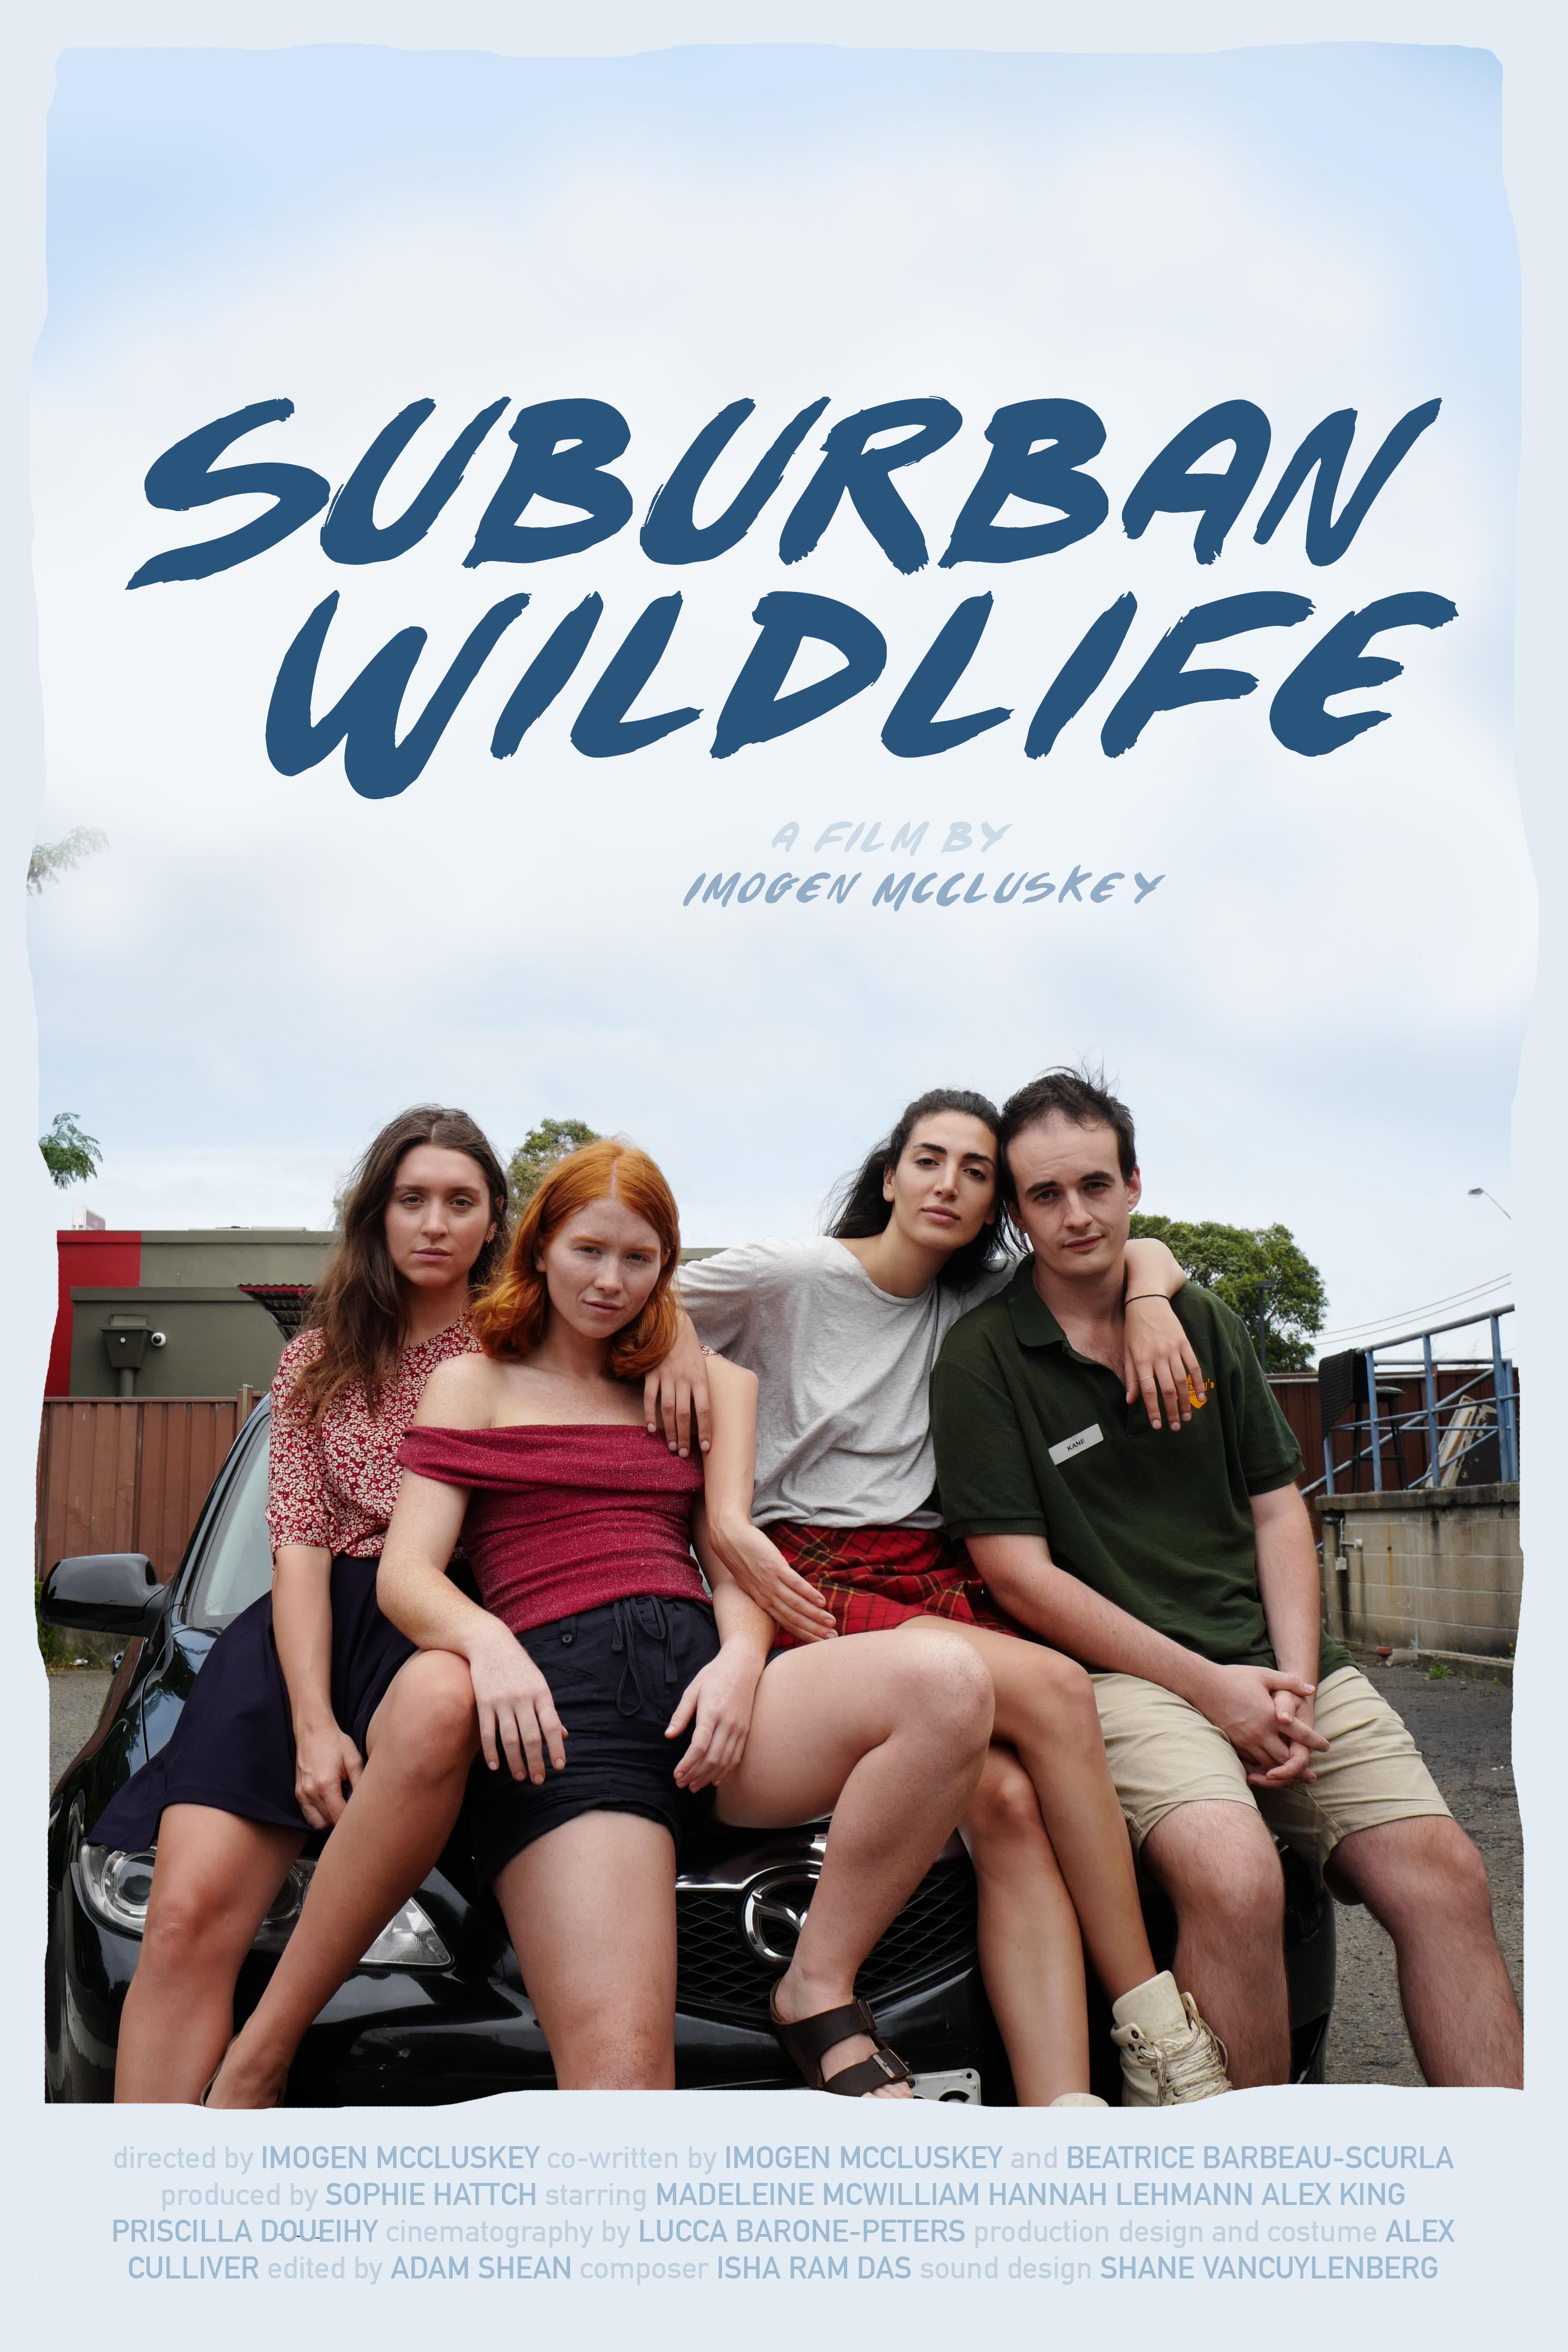 Nonton film Suburban Wildlife layarkaca21 indoxx1 ganool online streaming terbaru